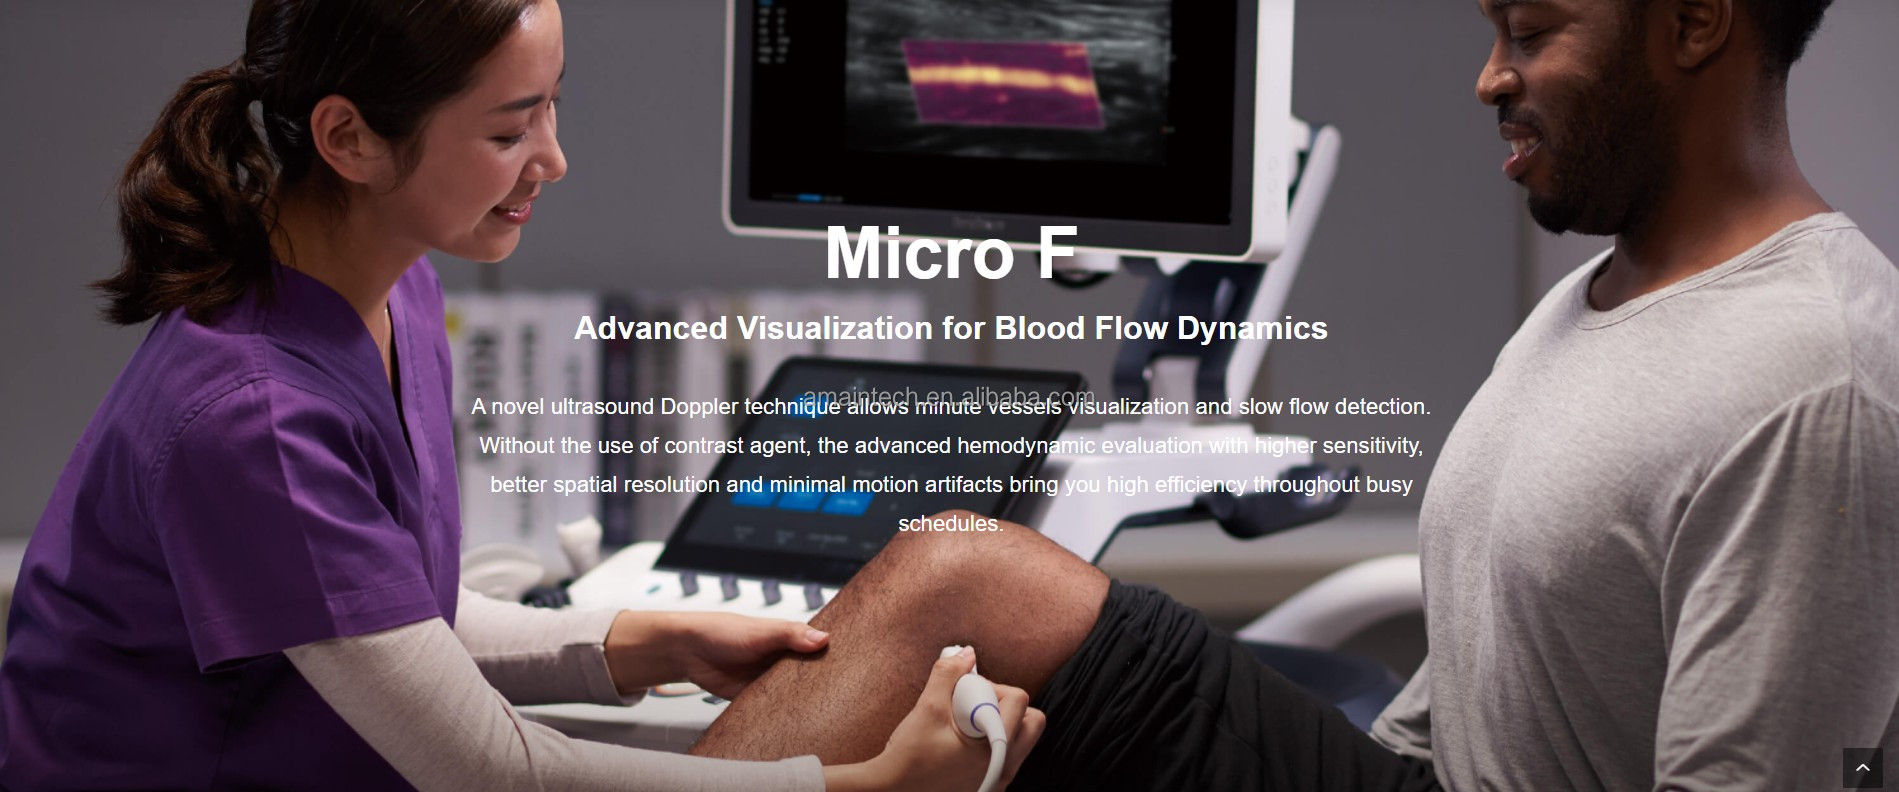 Sonoscape Enhanced Version Intelligent Wis+ platform Sonoscape S60 4D Trolley diagnosis ultrasound system Dengan multi probe